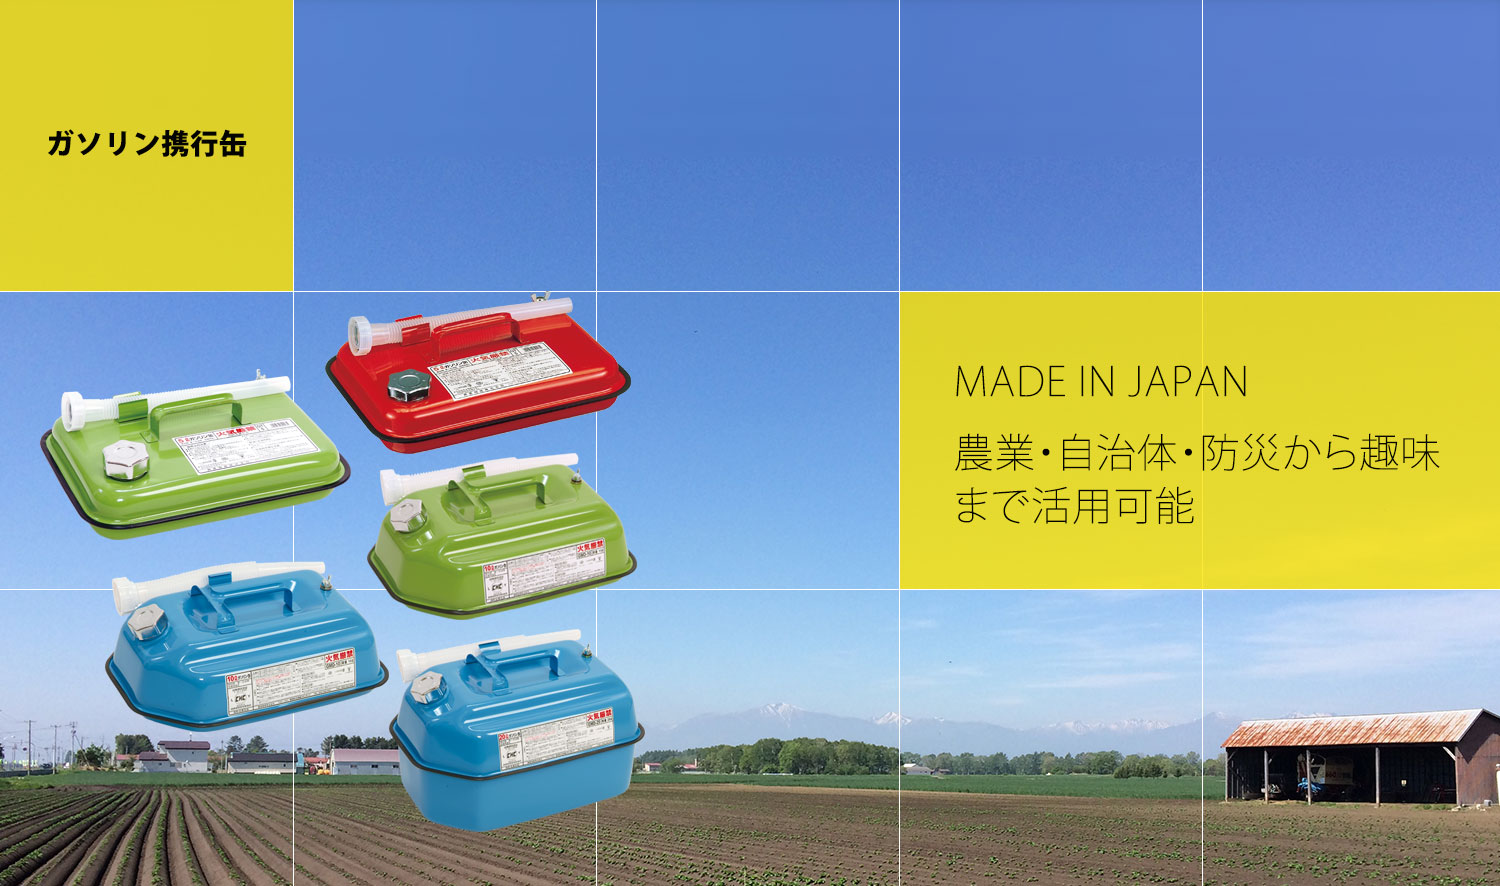 MADE IN JAPAN、農業・自治体・防災から趣味まで活用可能